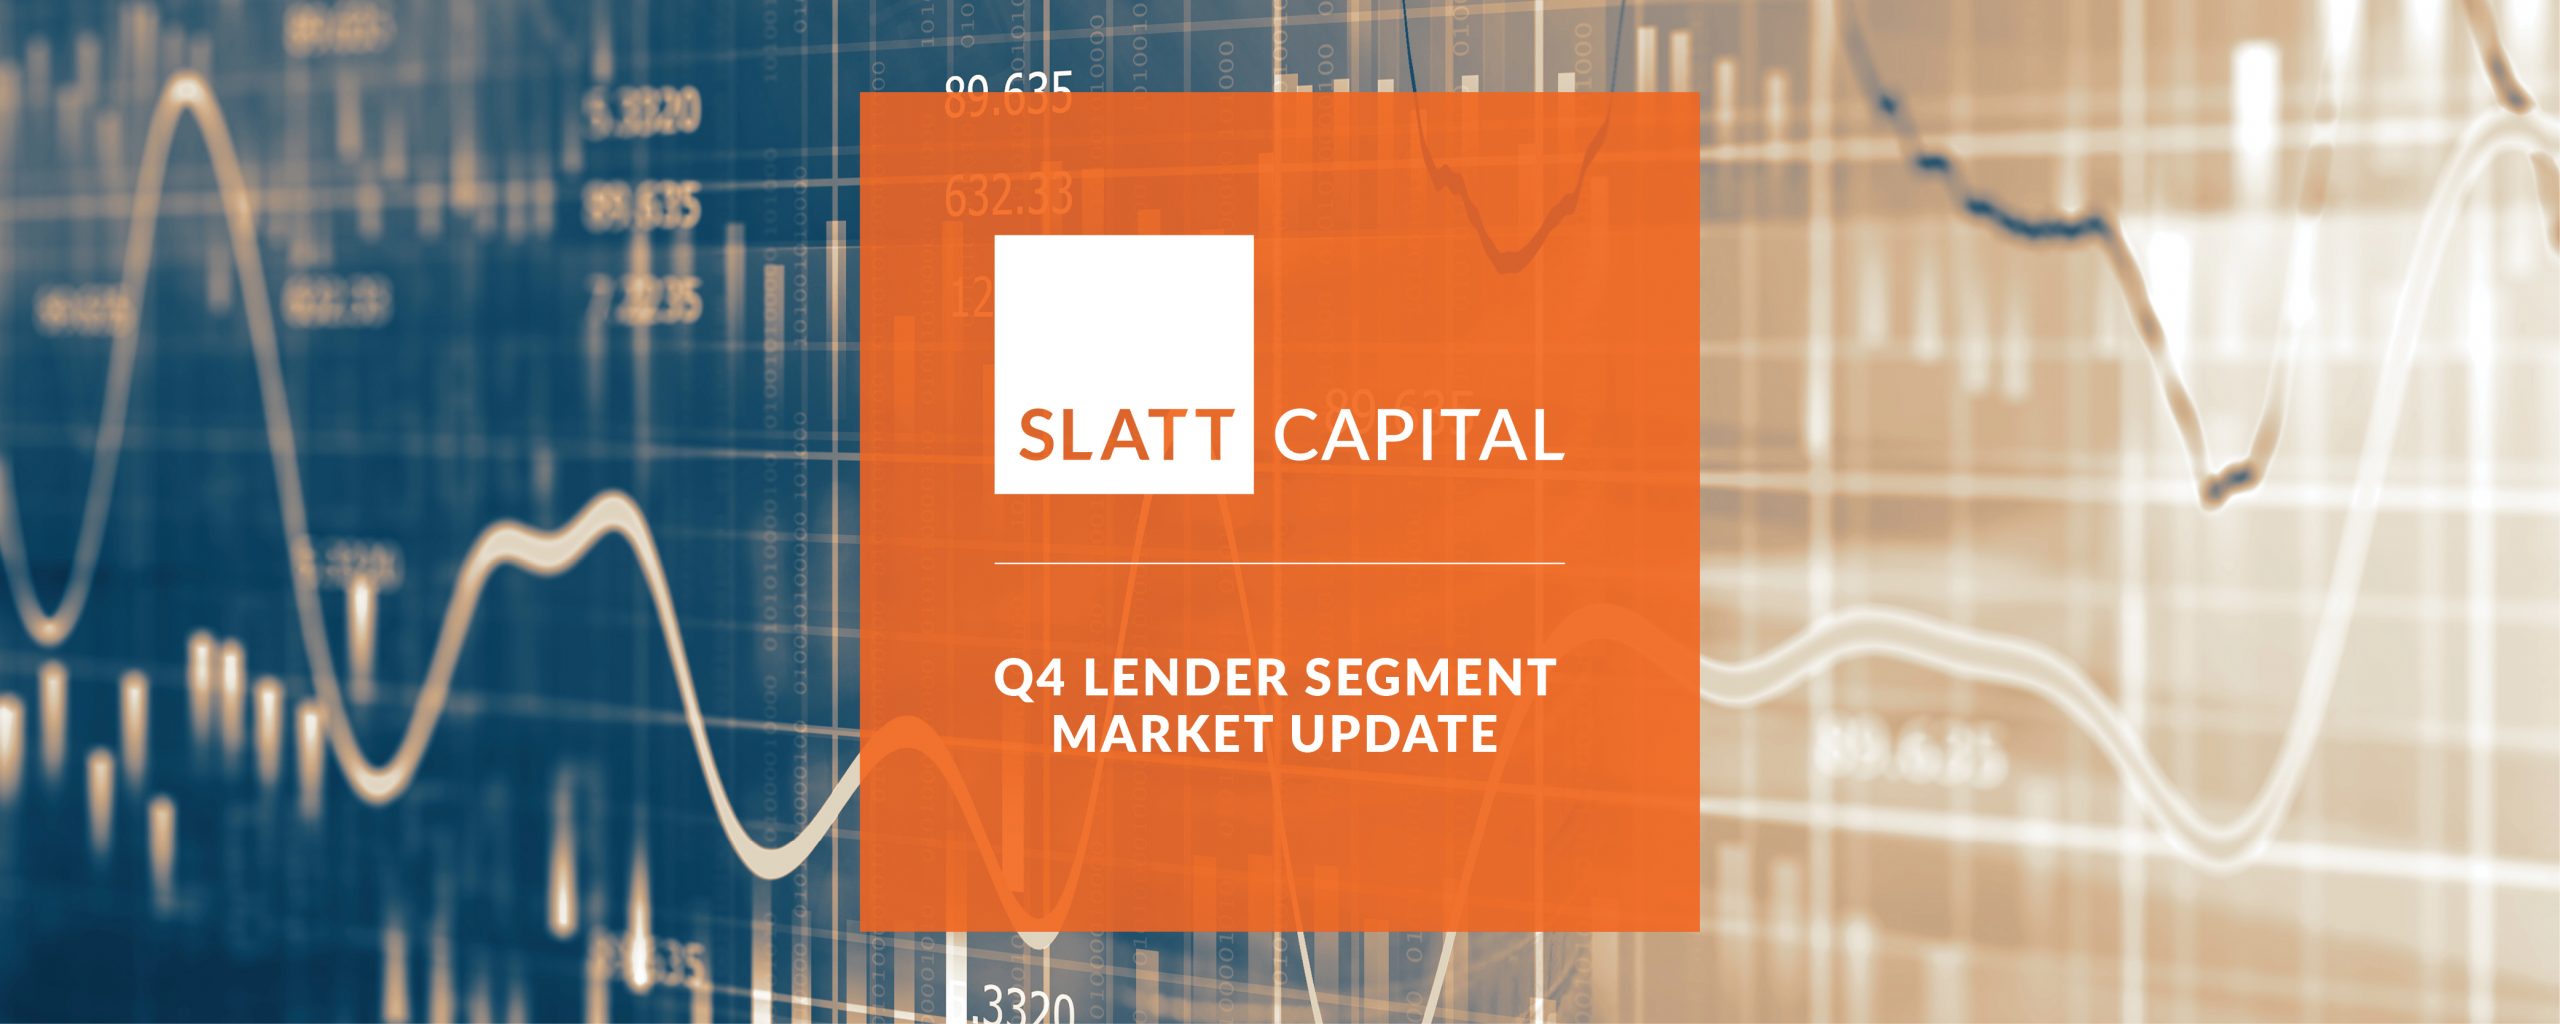 Commercial_Mortgage_Lenders market update